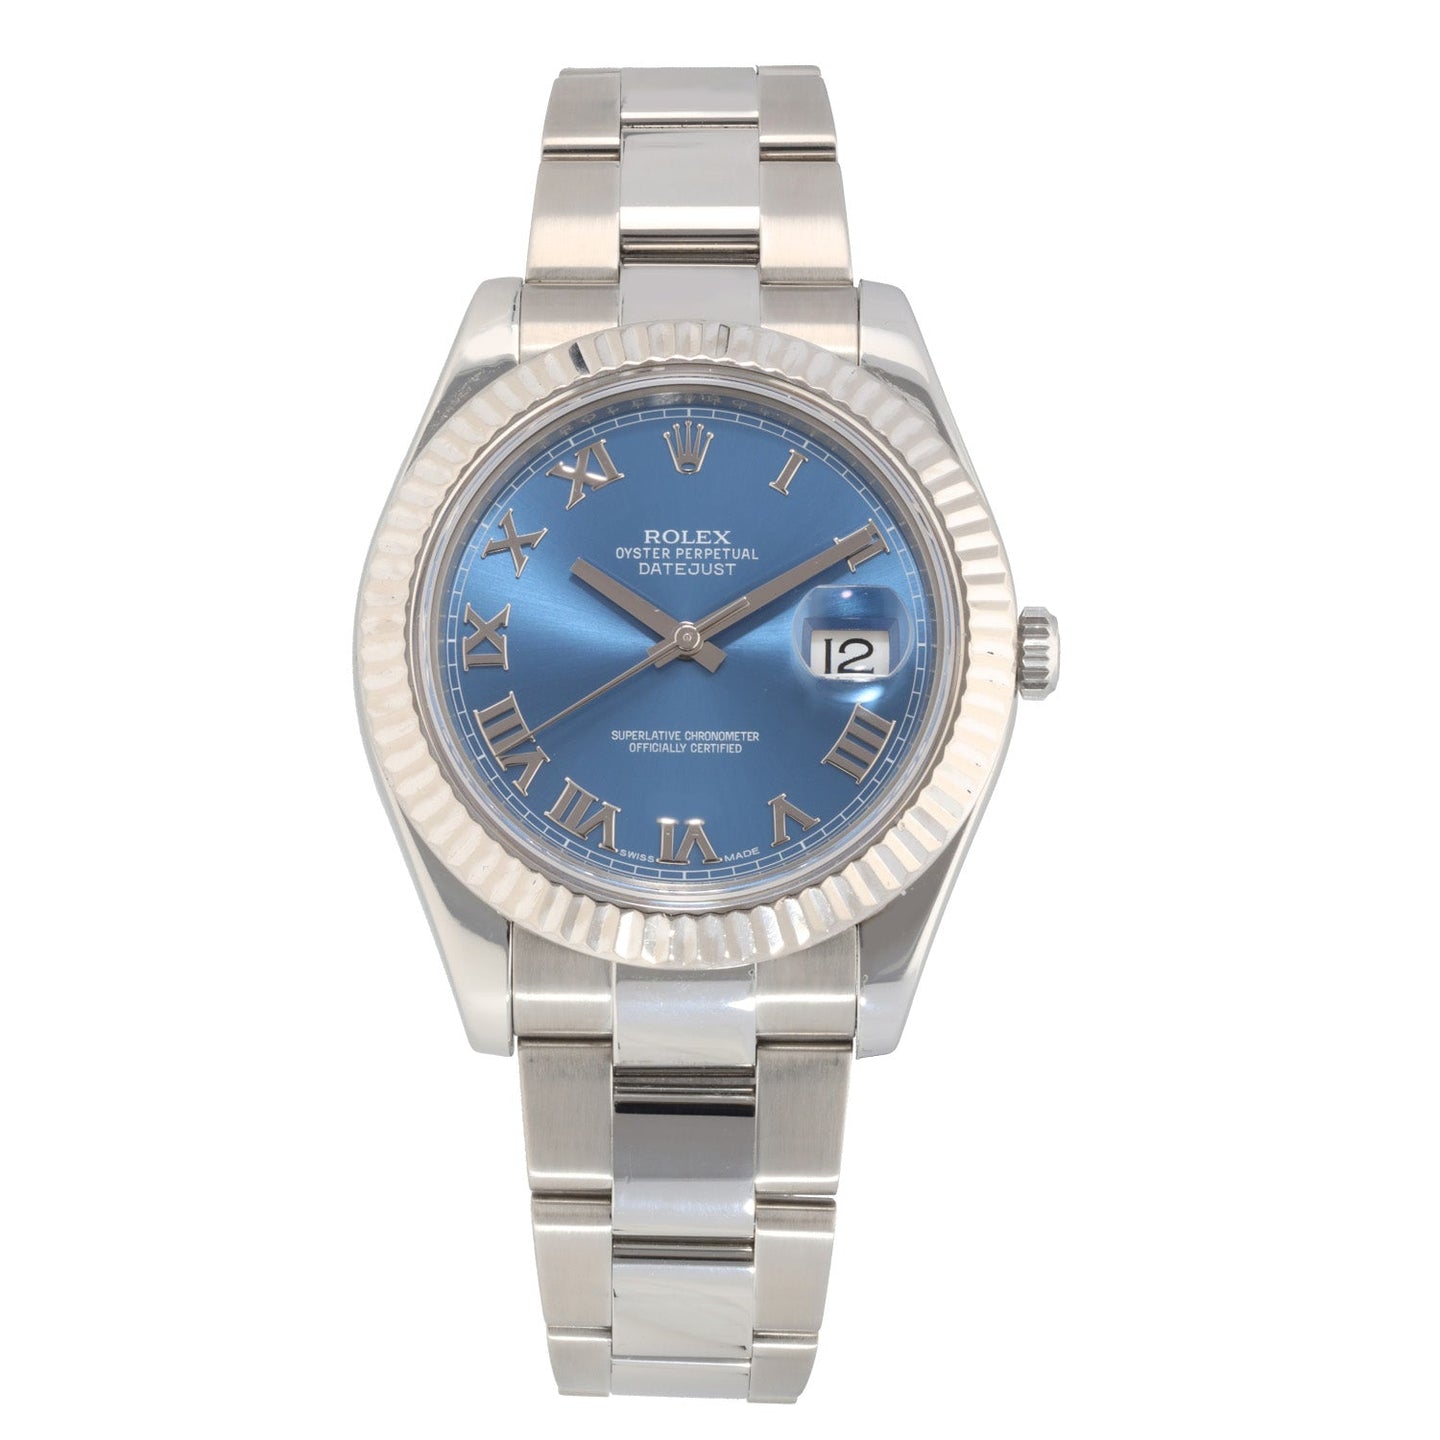 Rolex Datejust II 116334 41mm Stainless Steel Watch